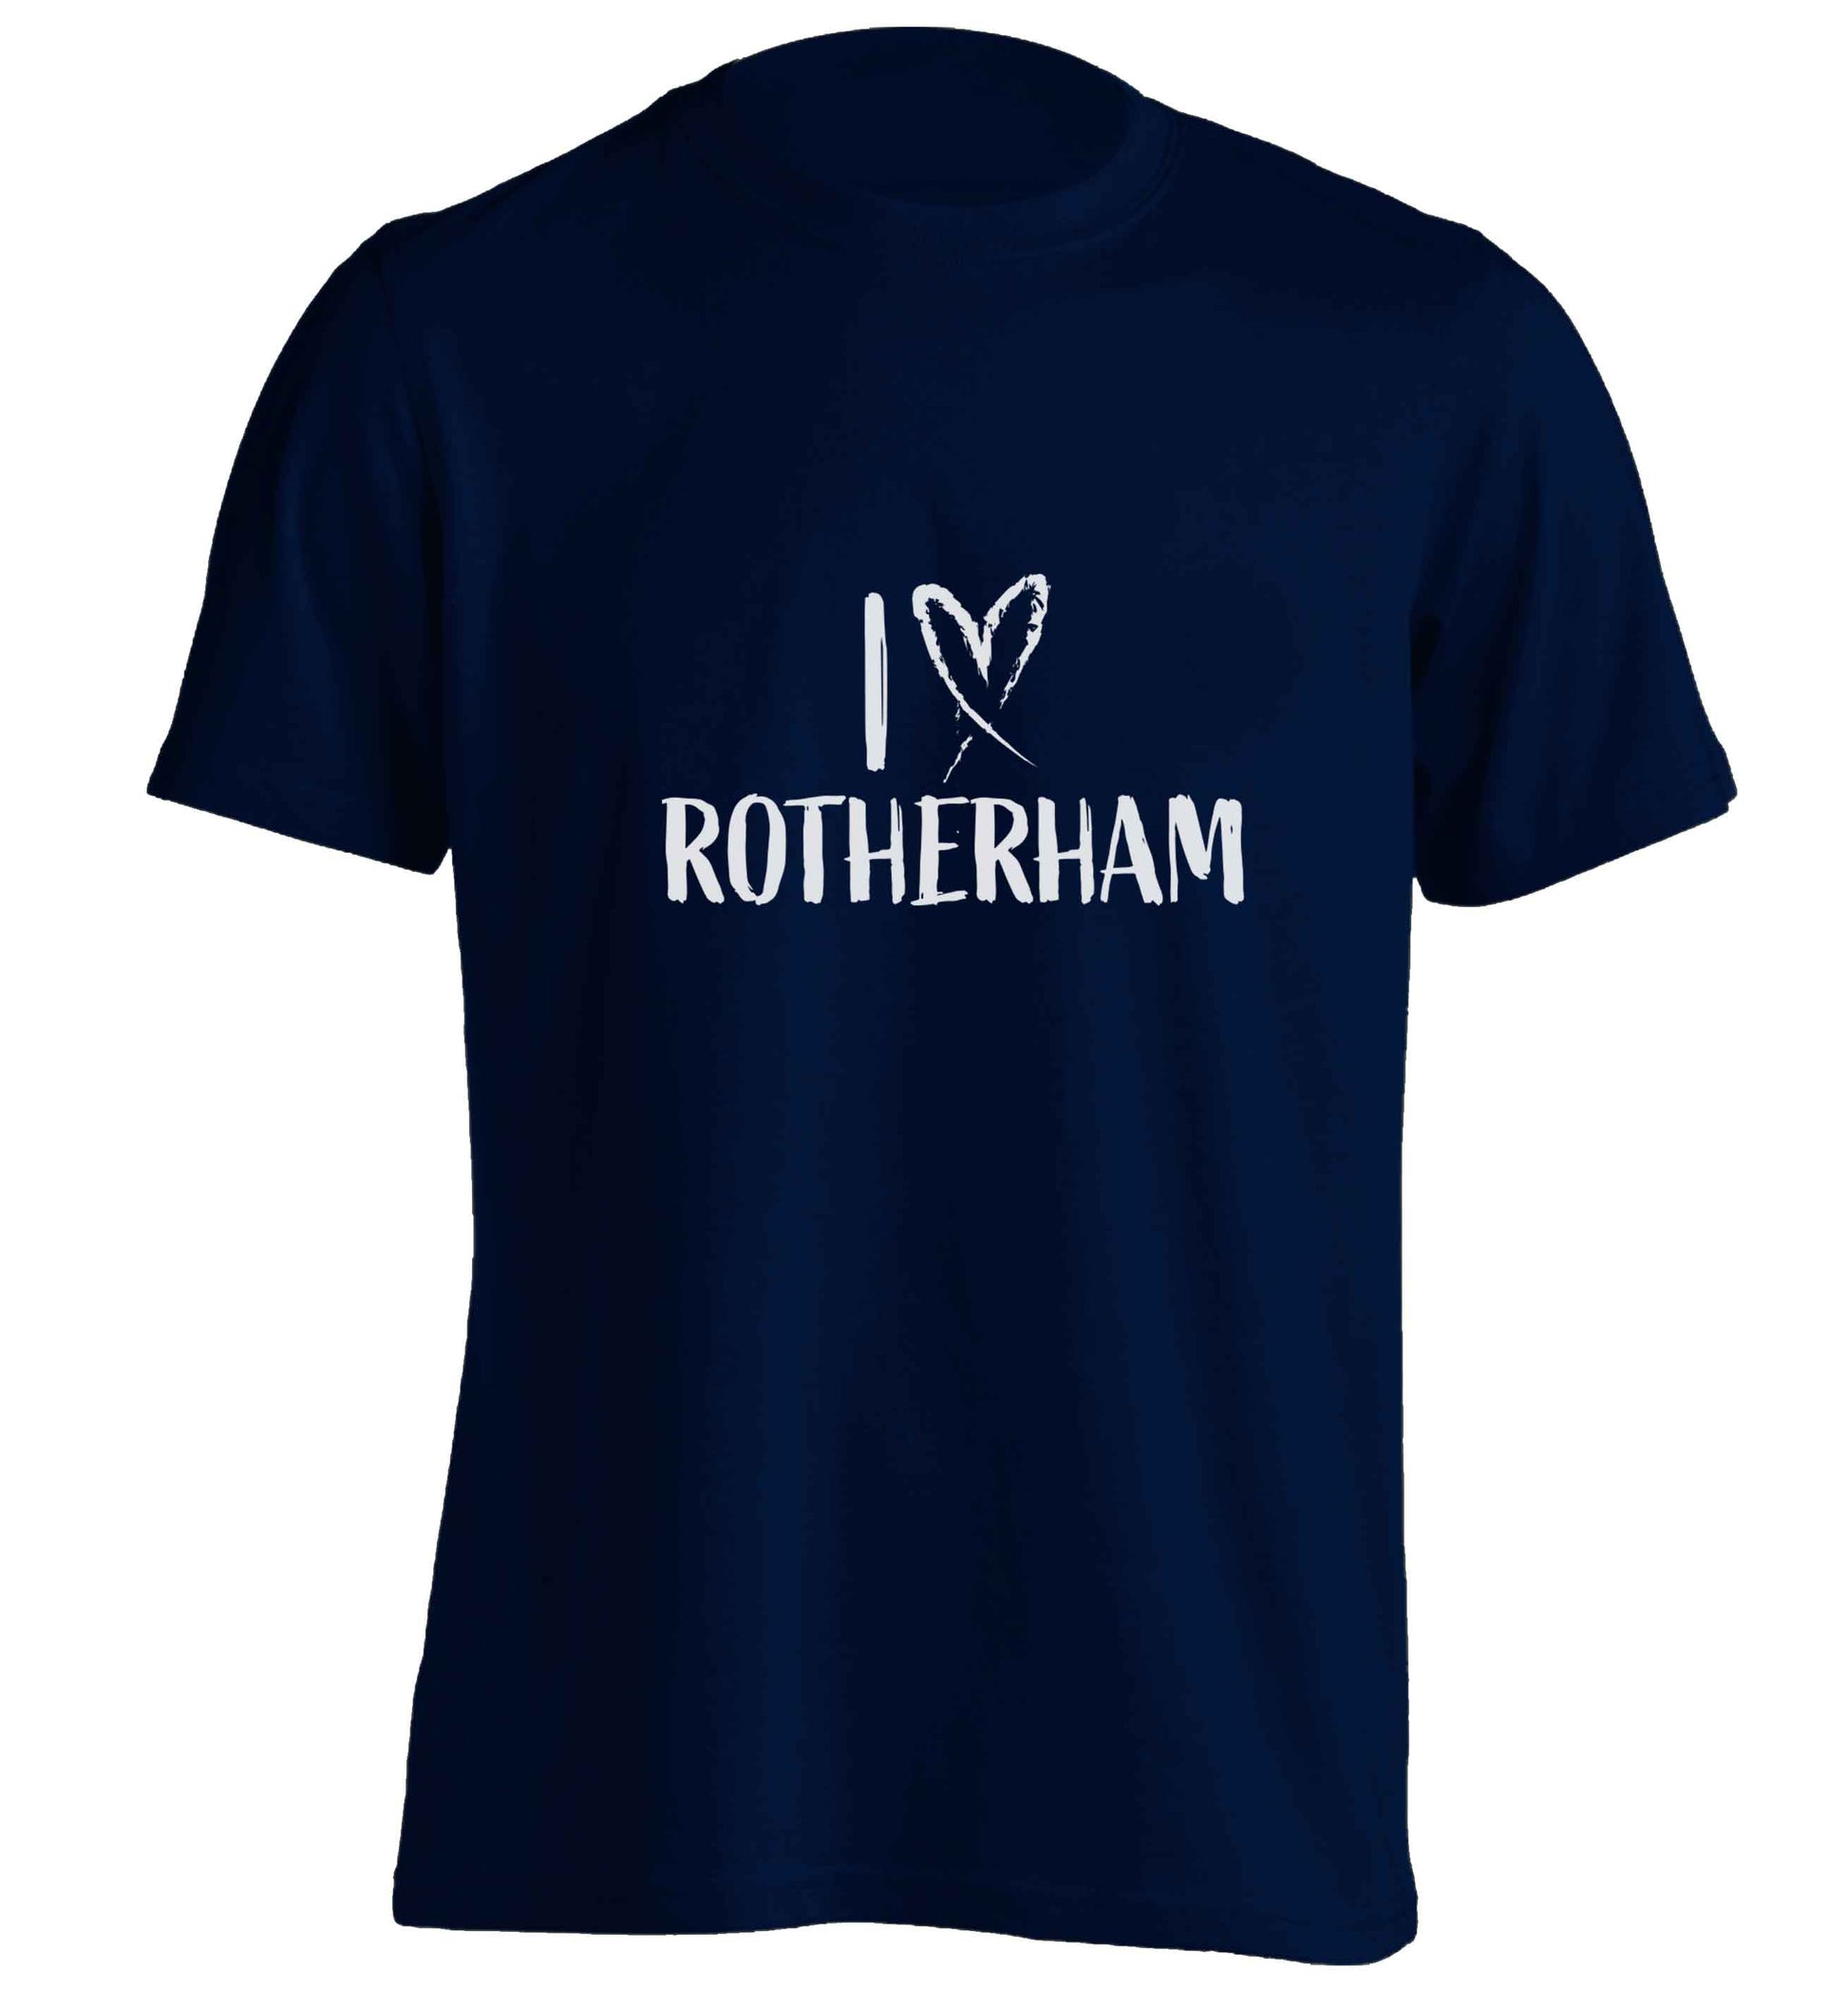 I love Rotherham adults unisex navy Tshirt 2XL